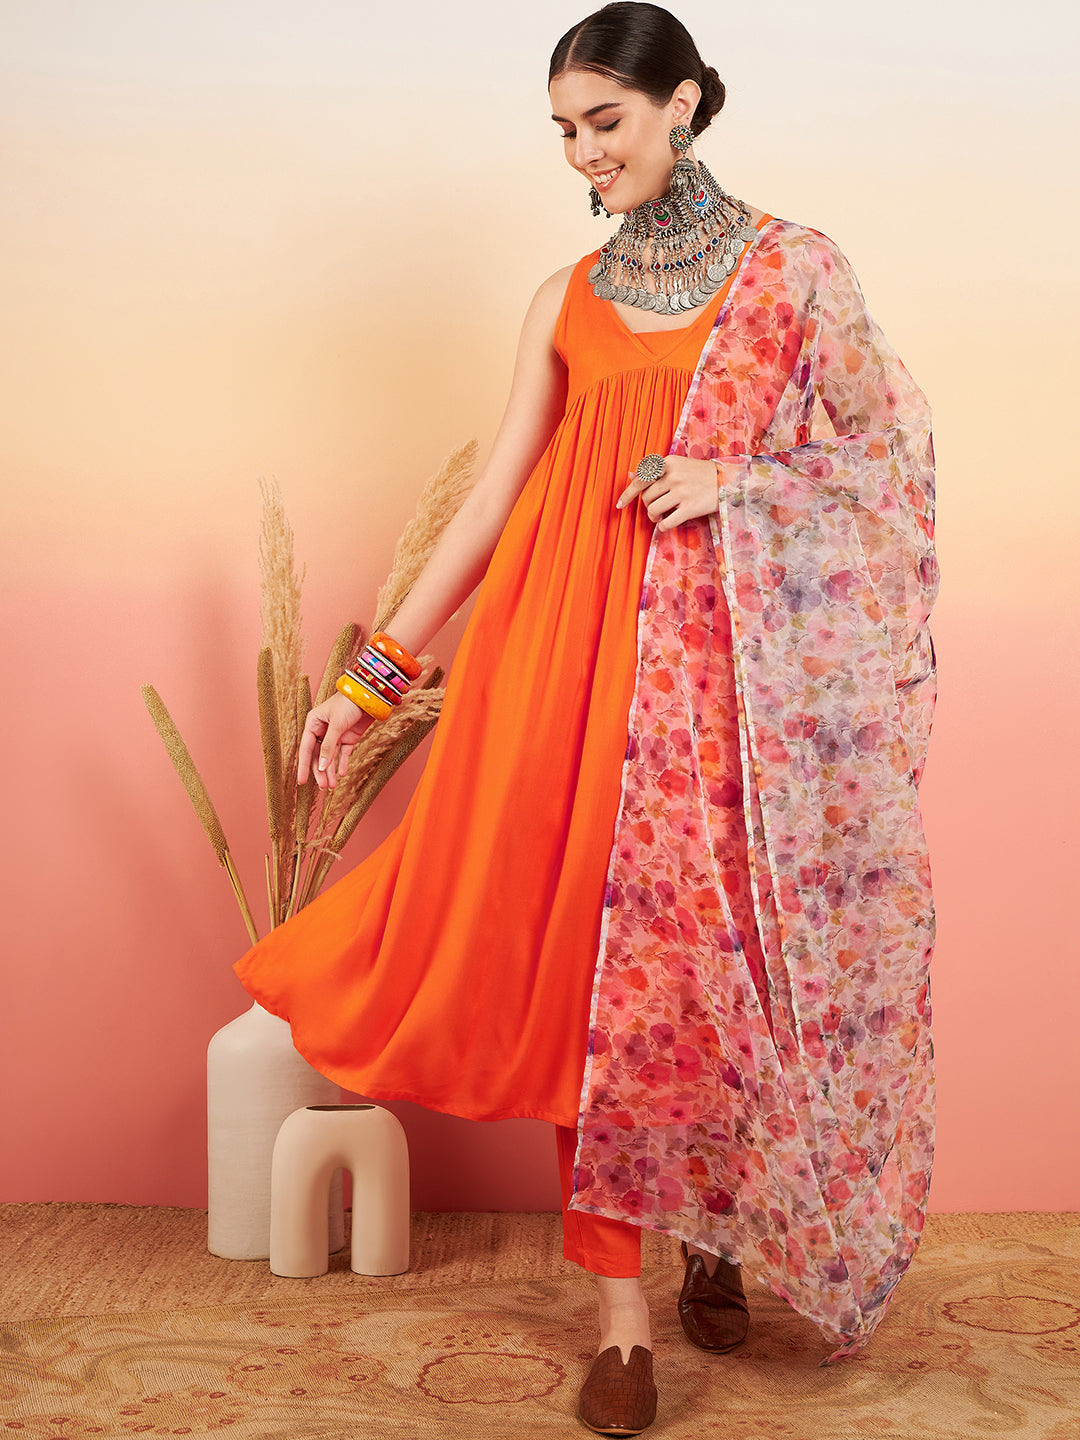 Get Gathered Motif Printed Sleeveless Tunic at ₹ 725 | LBB Shop